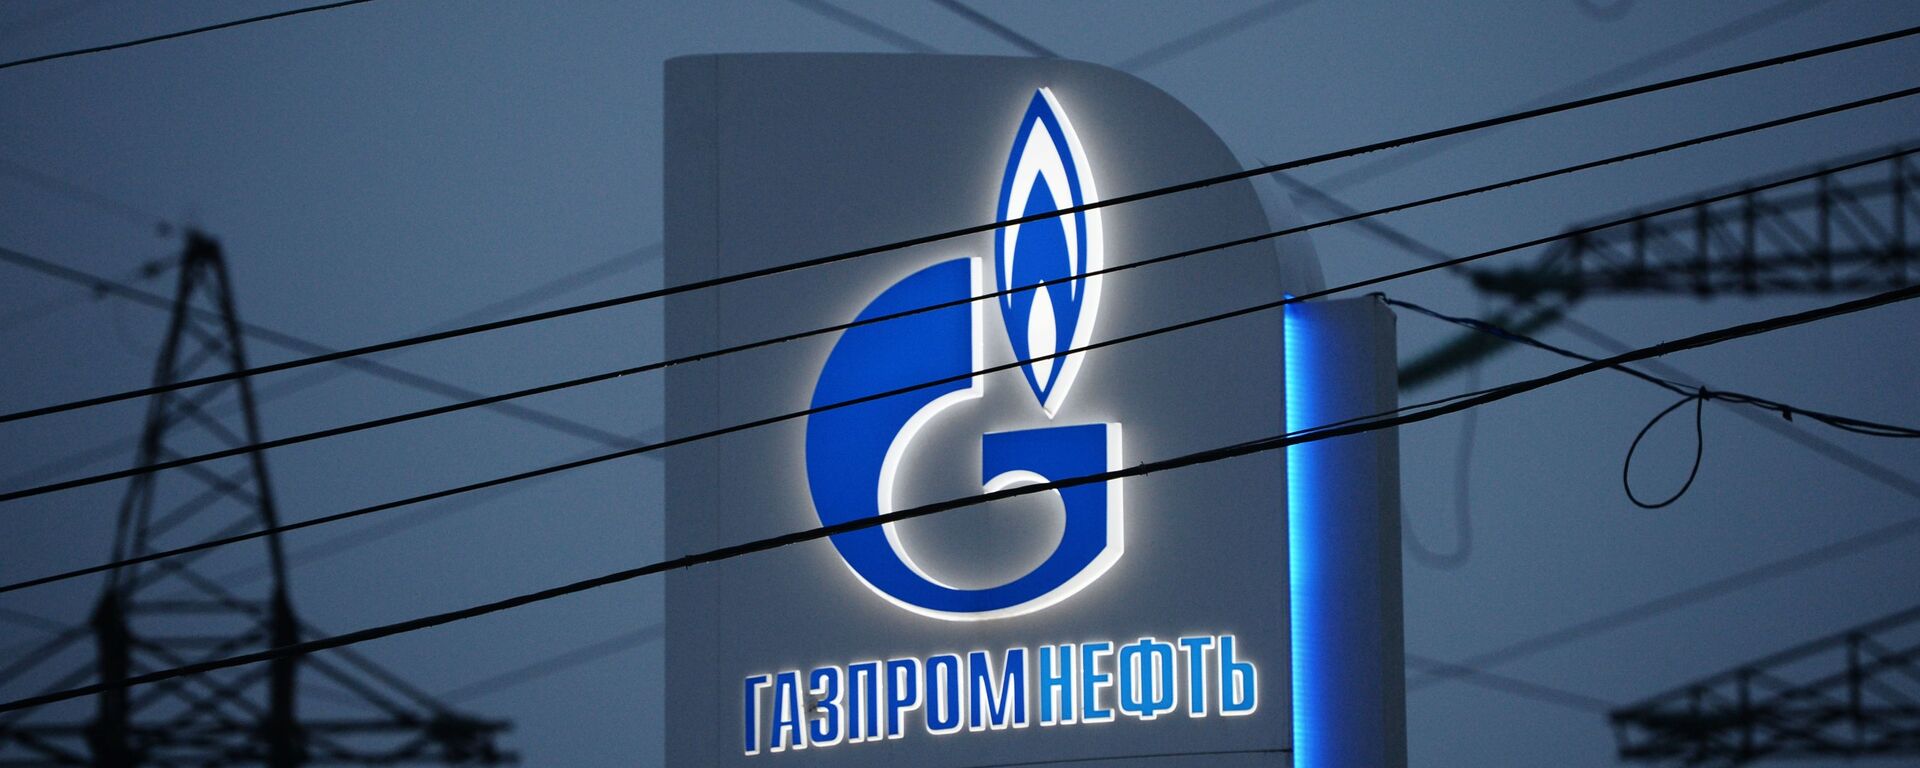 Logo de la empresa rusa Gazprom Neft - Sputnik Mundo, 1920, 08.02.2021